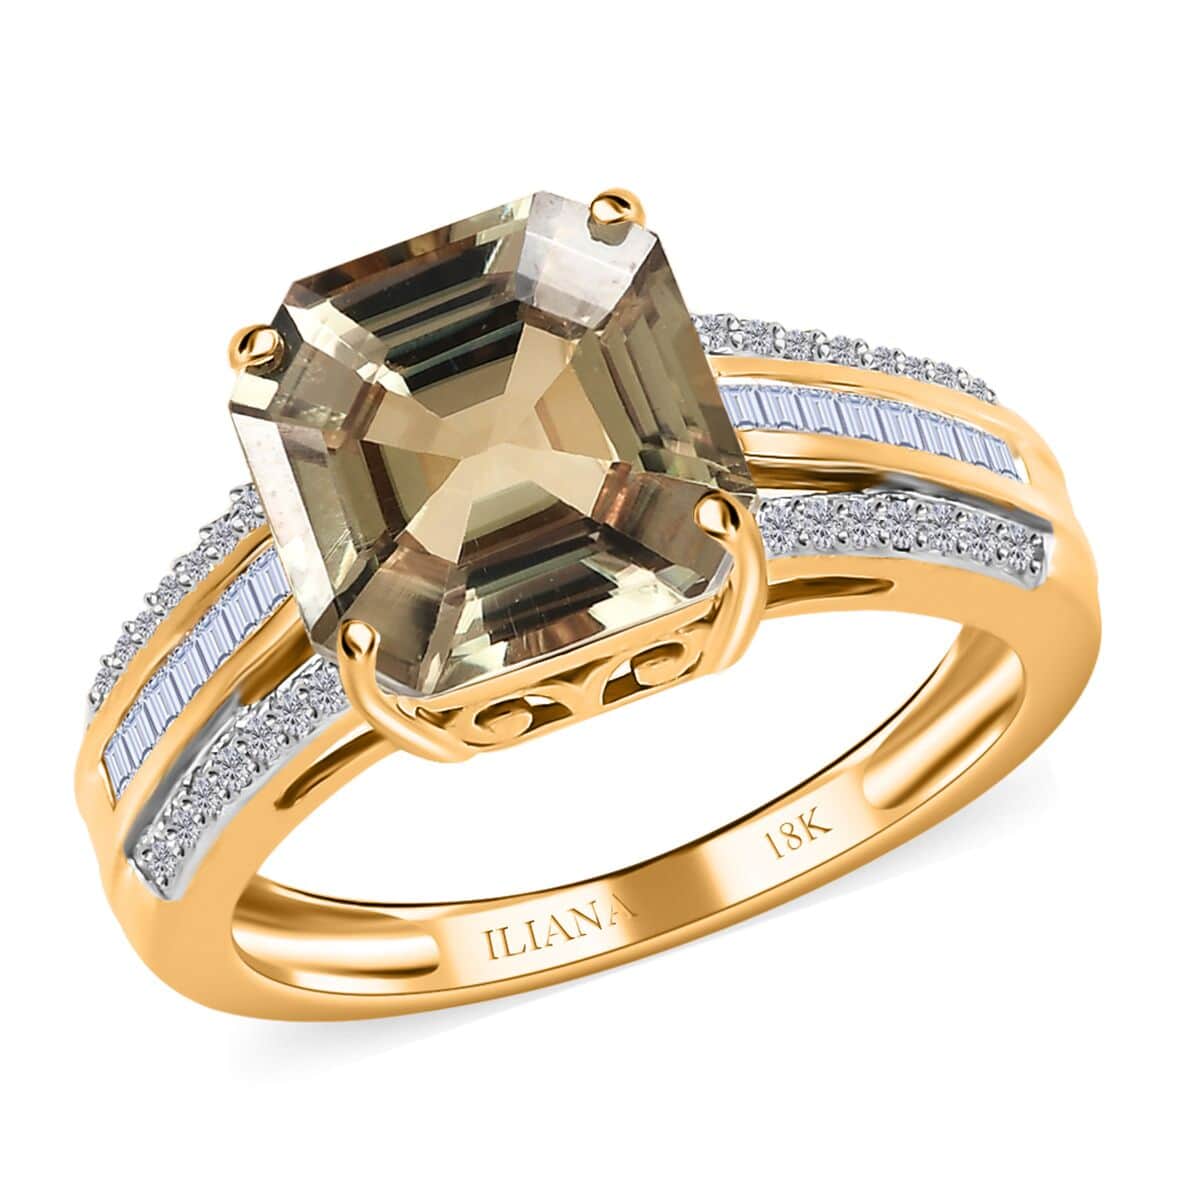 Iliana 18K Yellow Gold AAA Turkizite and G-H SI Diamond Ring (Size 6.0) 4.25 Grams 4.35 ctw image number 0